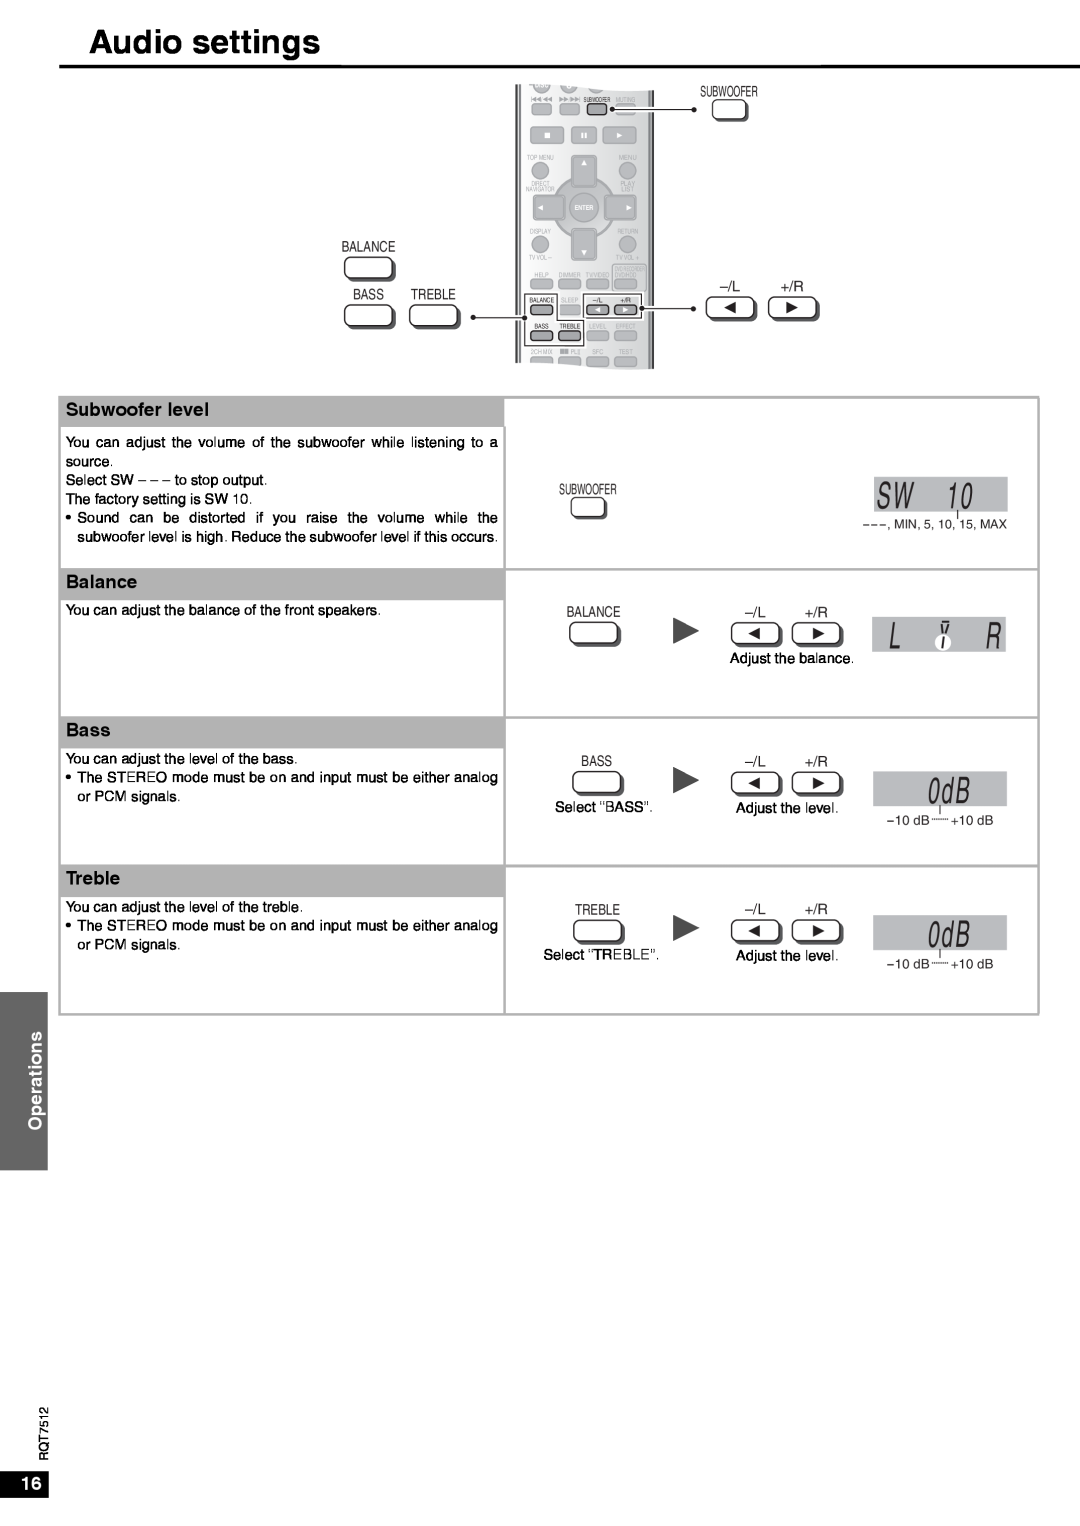 Panasonic SA-XR30 important safety instructions Audio settings, Operations, Balance Bass Treble, L+/R, Subwoofer 